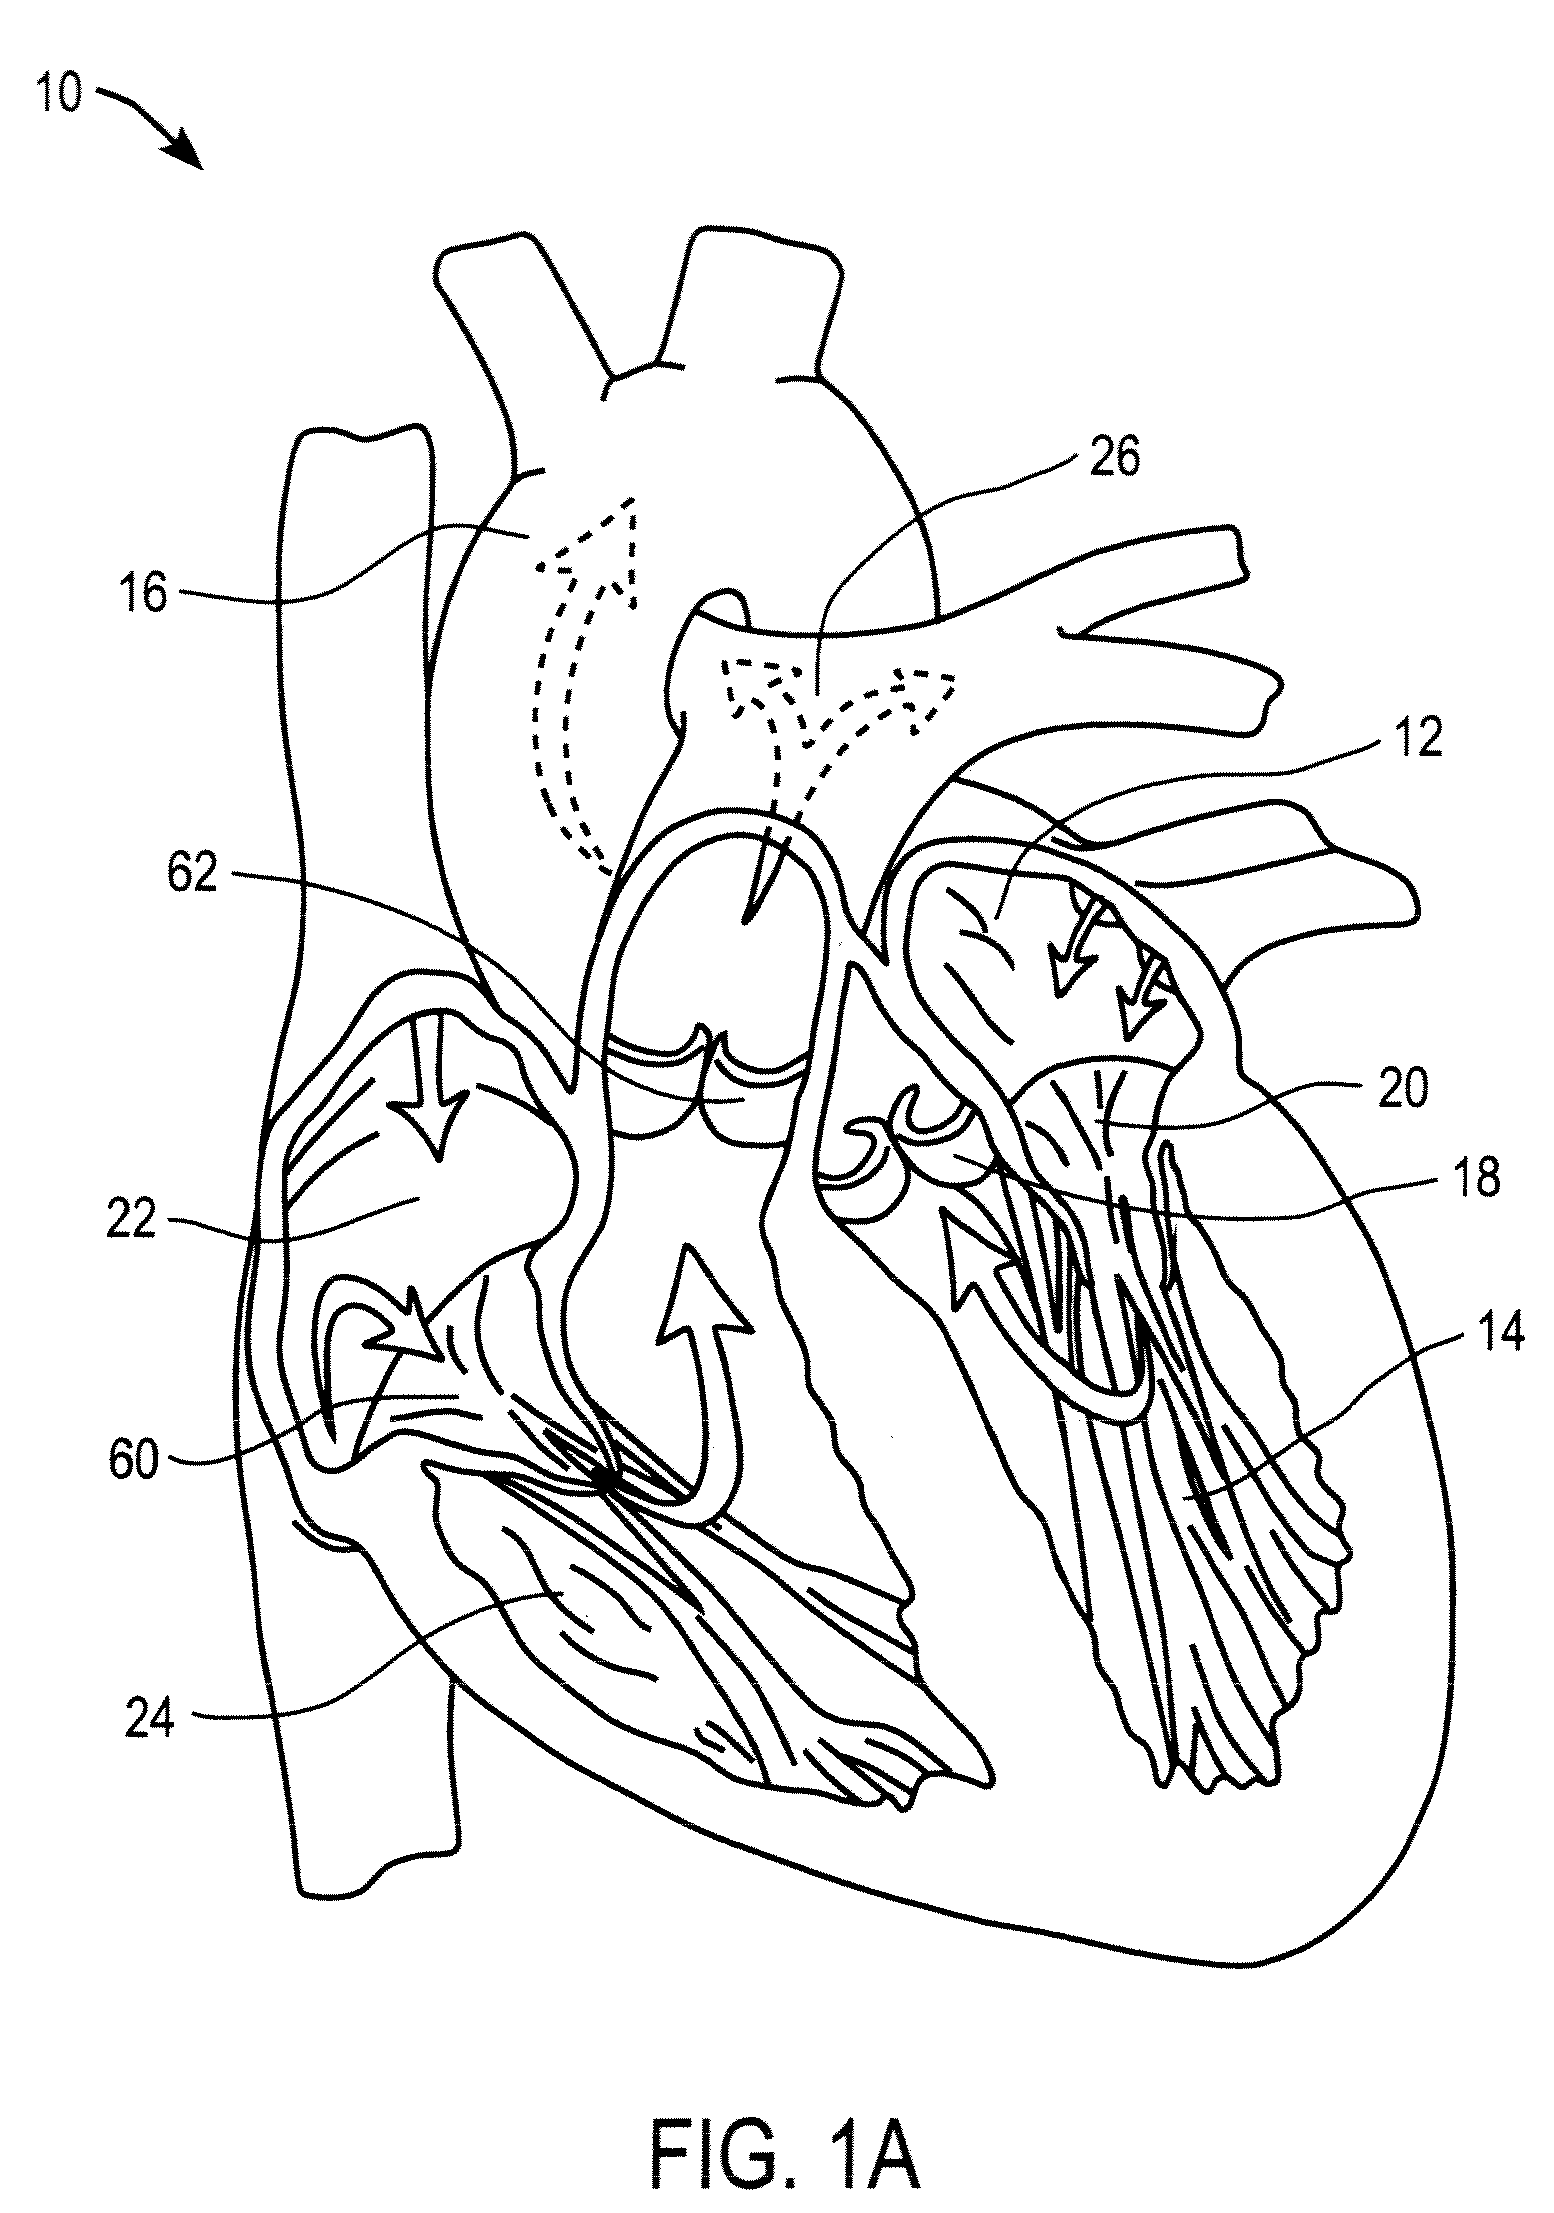 Apparatus and methods for heart valve repair